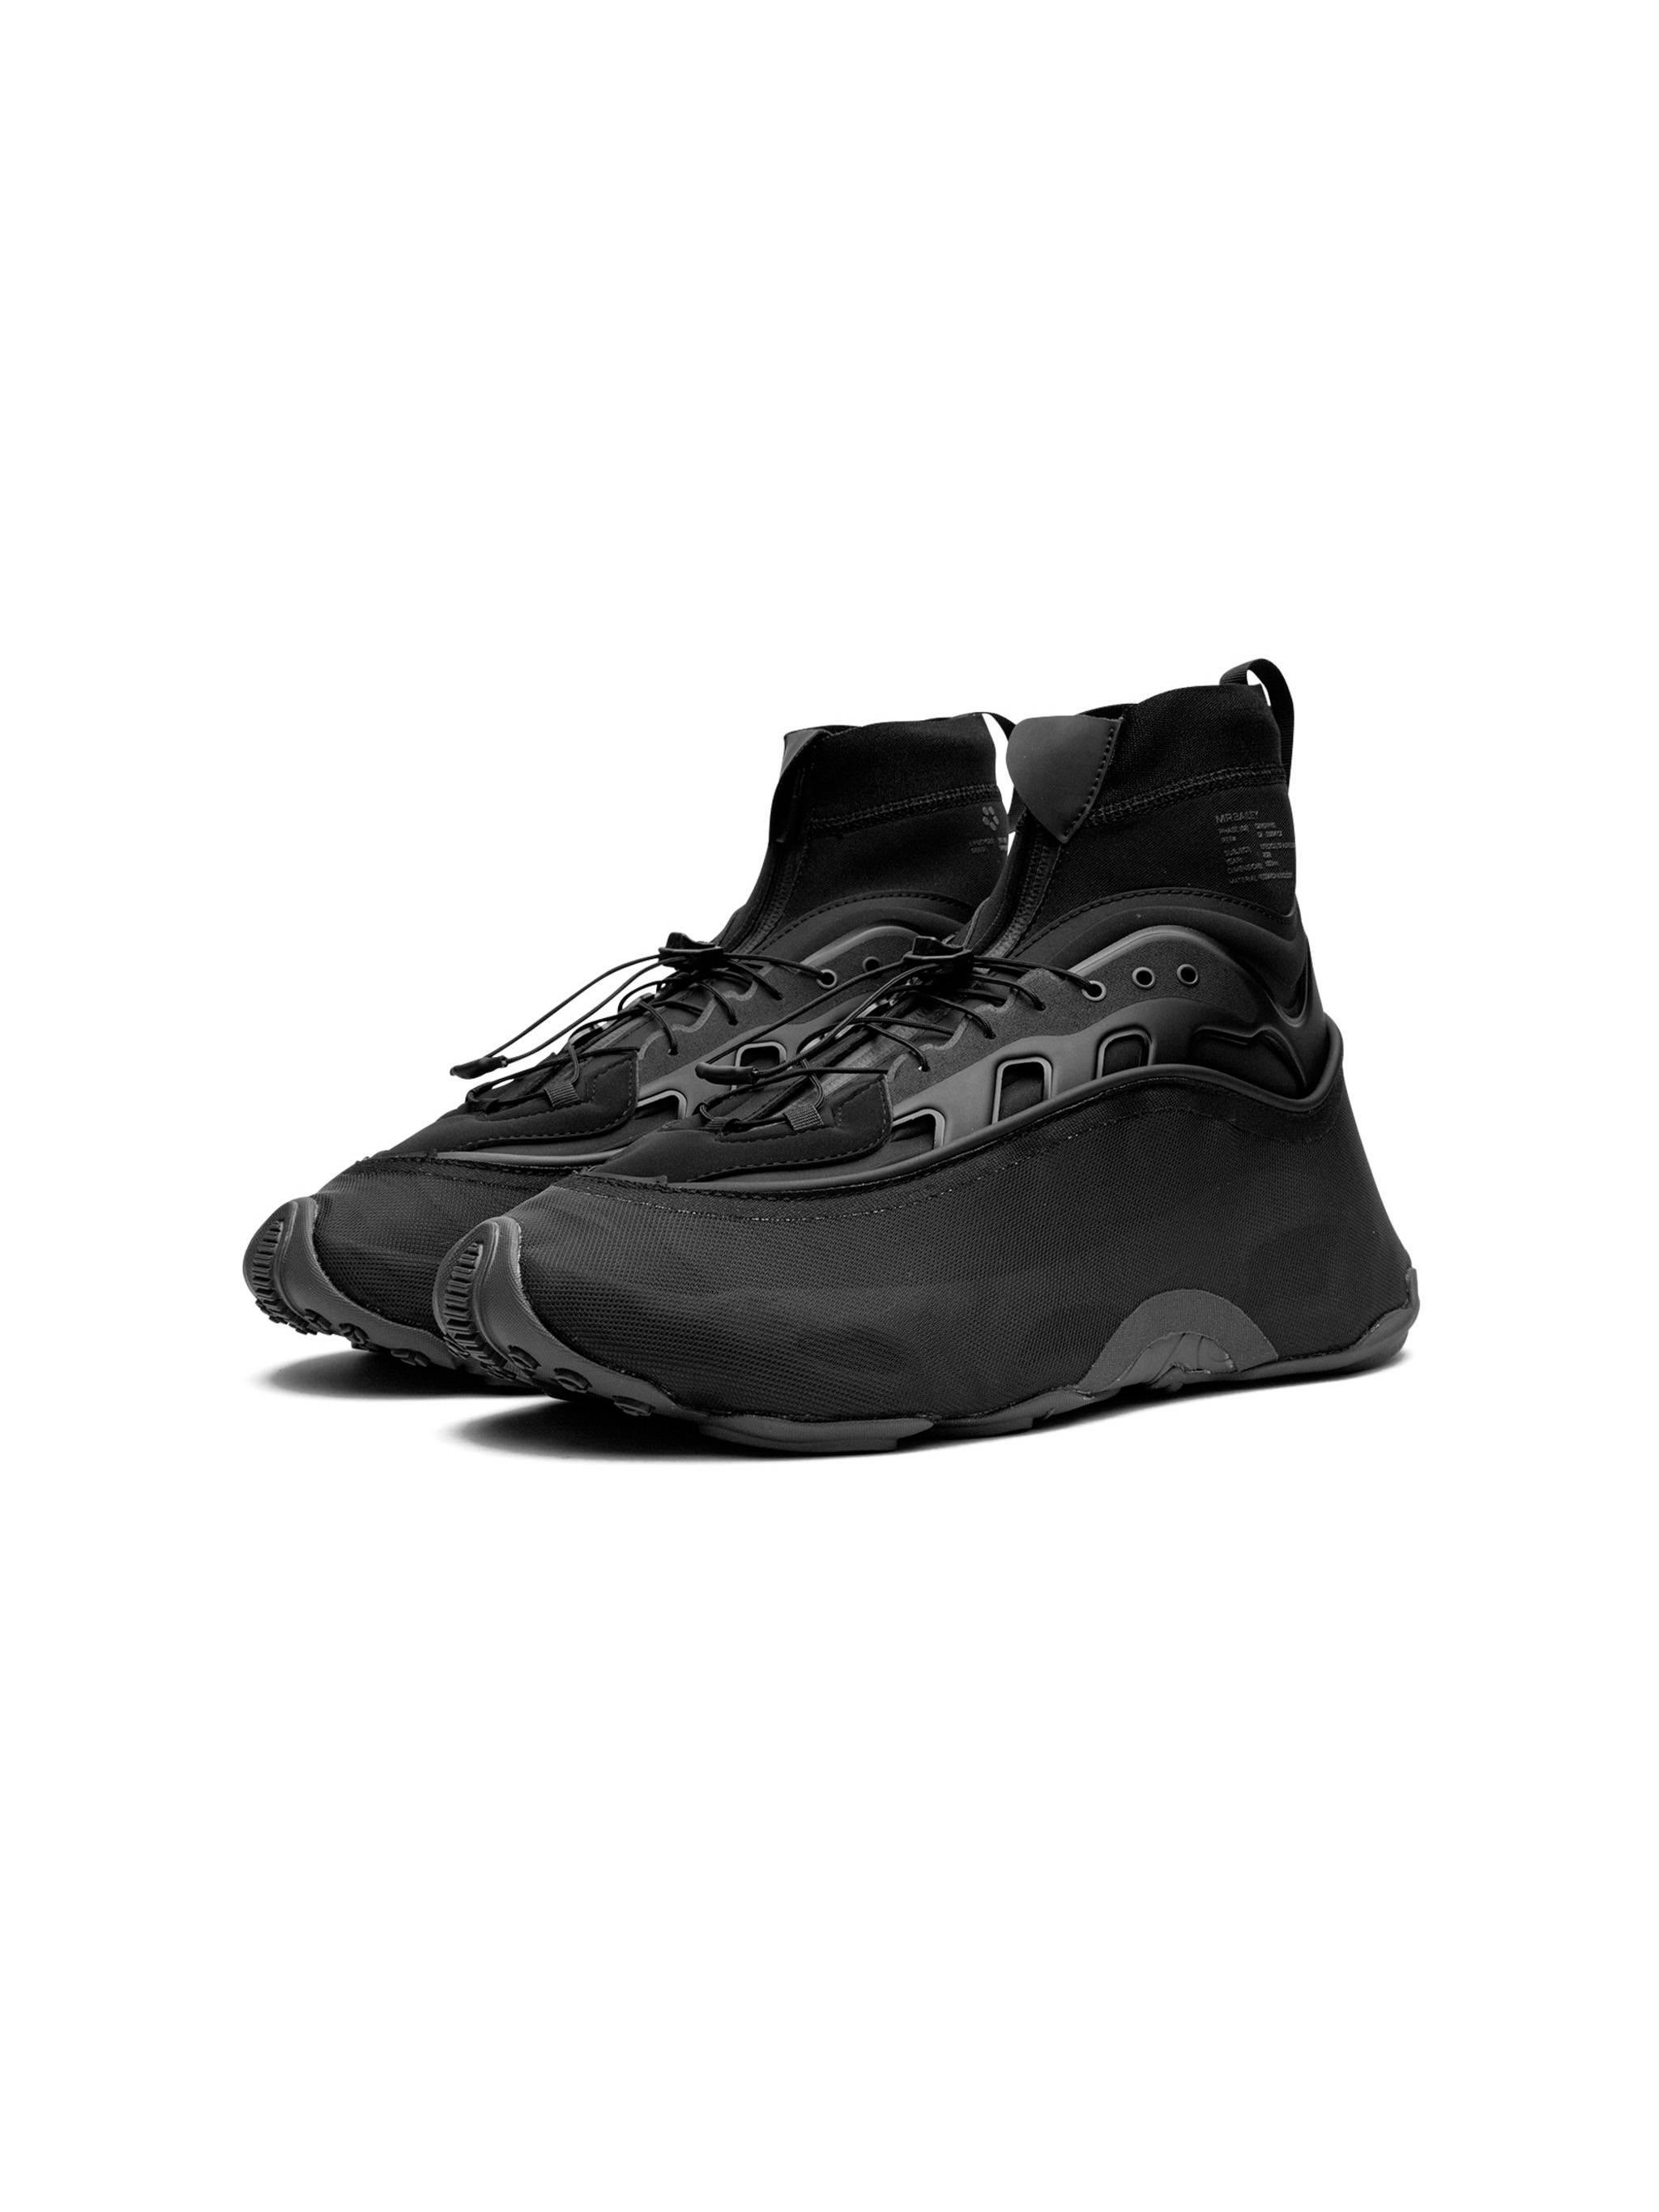 MRBAILEY × adidas Originals OZMORPHIS 'Core Black' (Size 7 to 13 US*) - 1